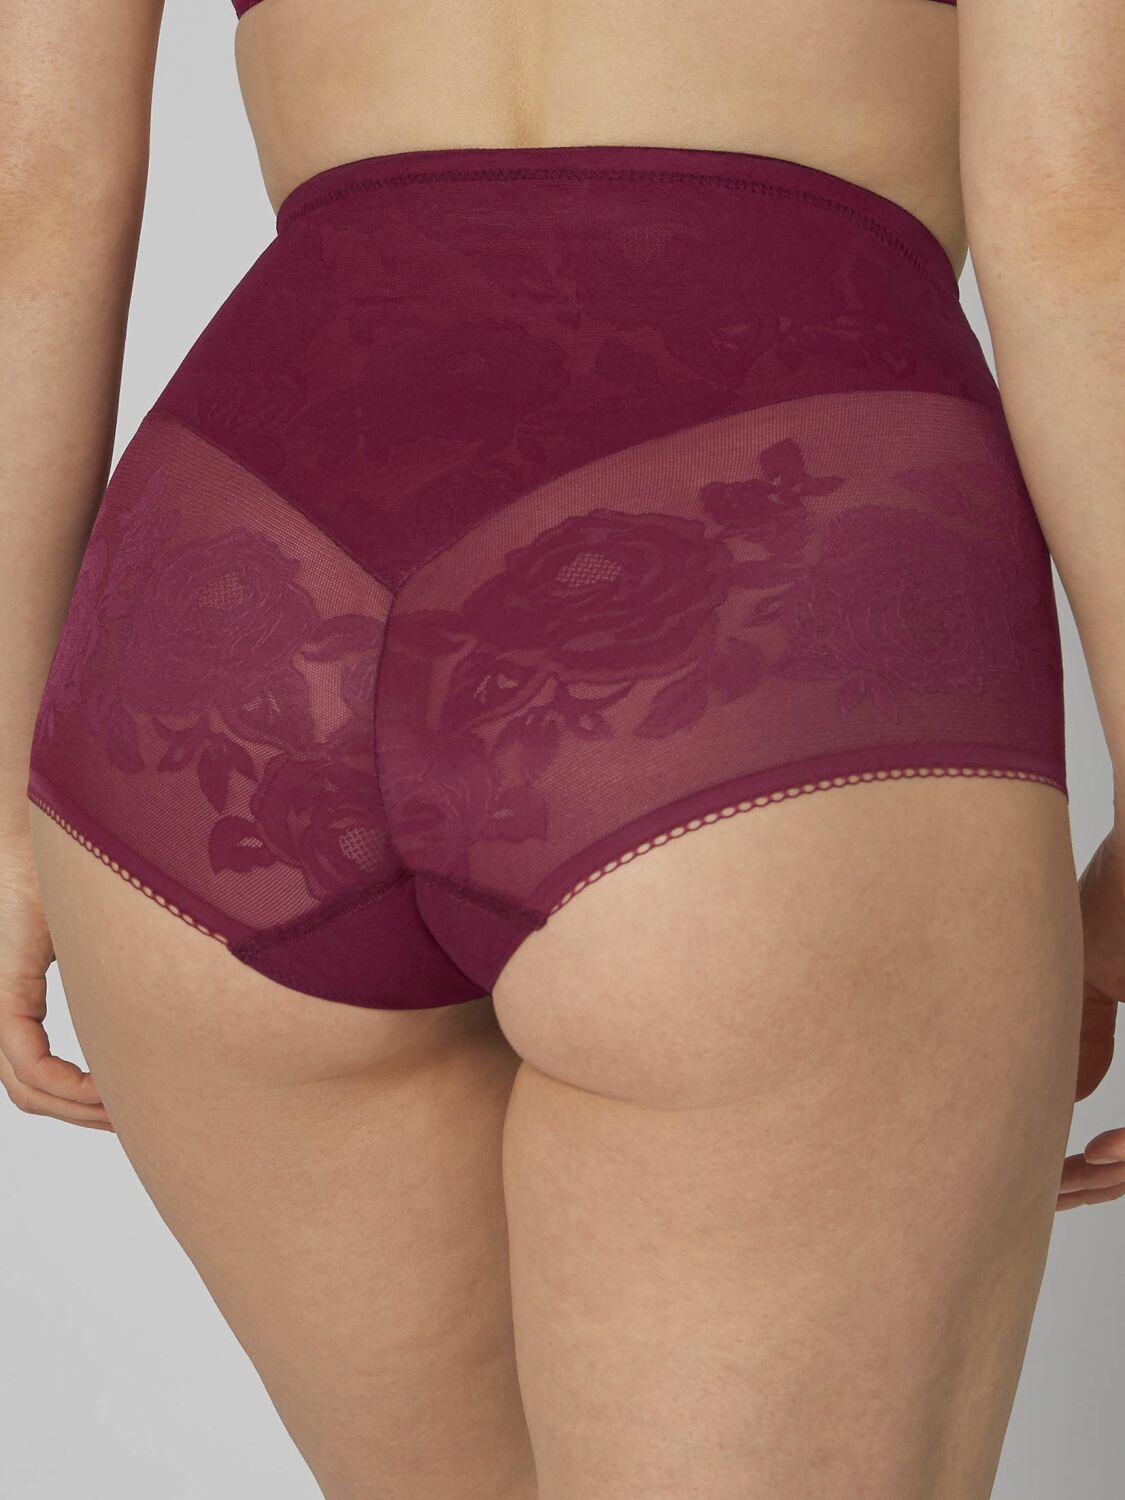 Triumph Panty+Wild Rose Sensation+Farbe Bordeaux 10206011 online bestellen  bei Herzog